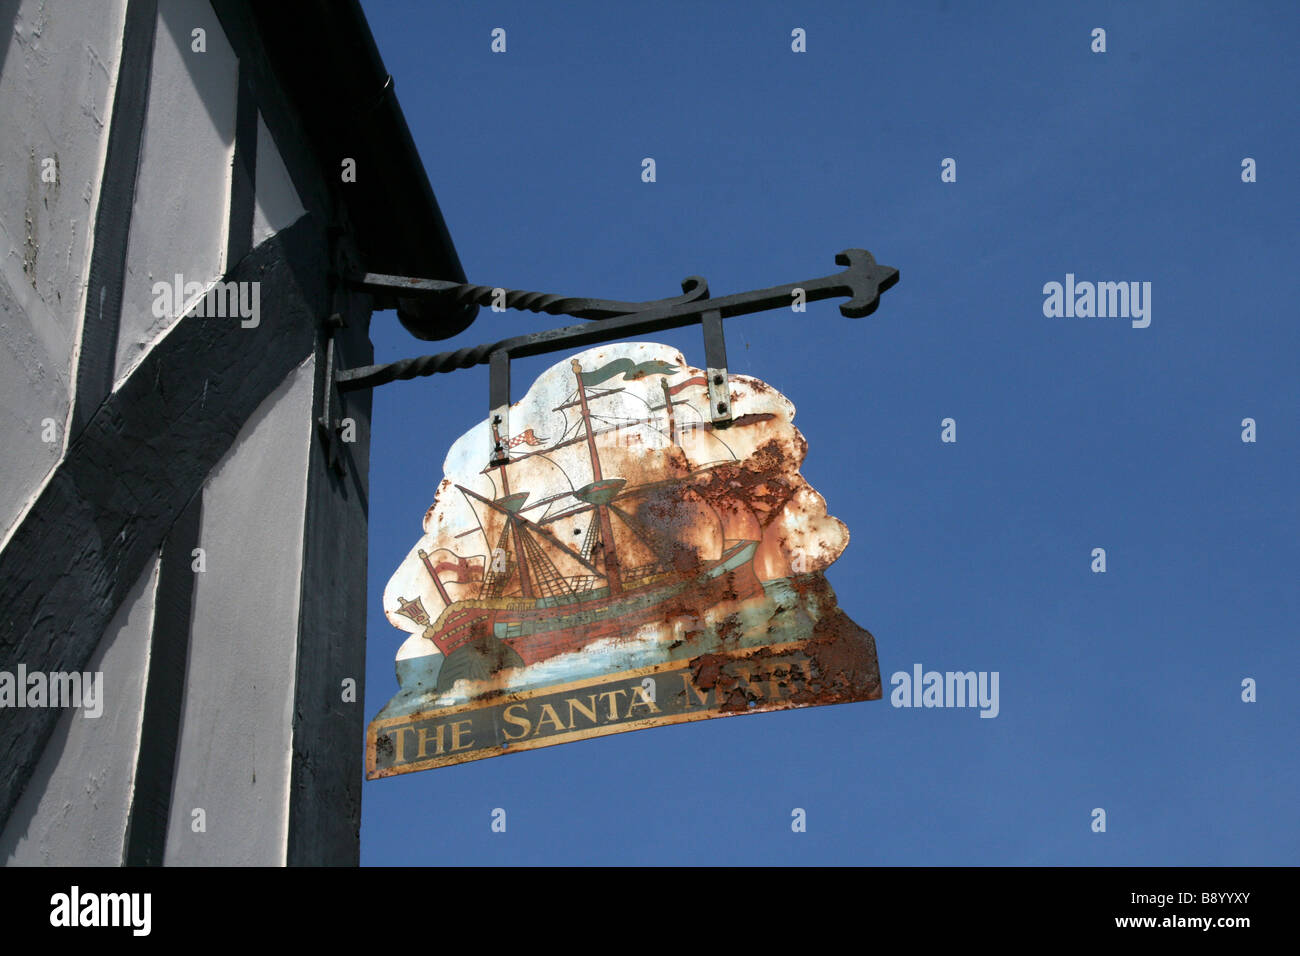 La Santa Maria, West Street, le seigle. Photo de Kim Craig. Banque D'Images